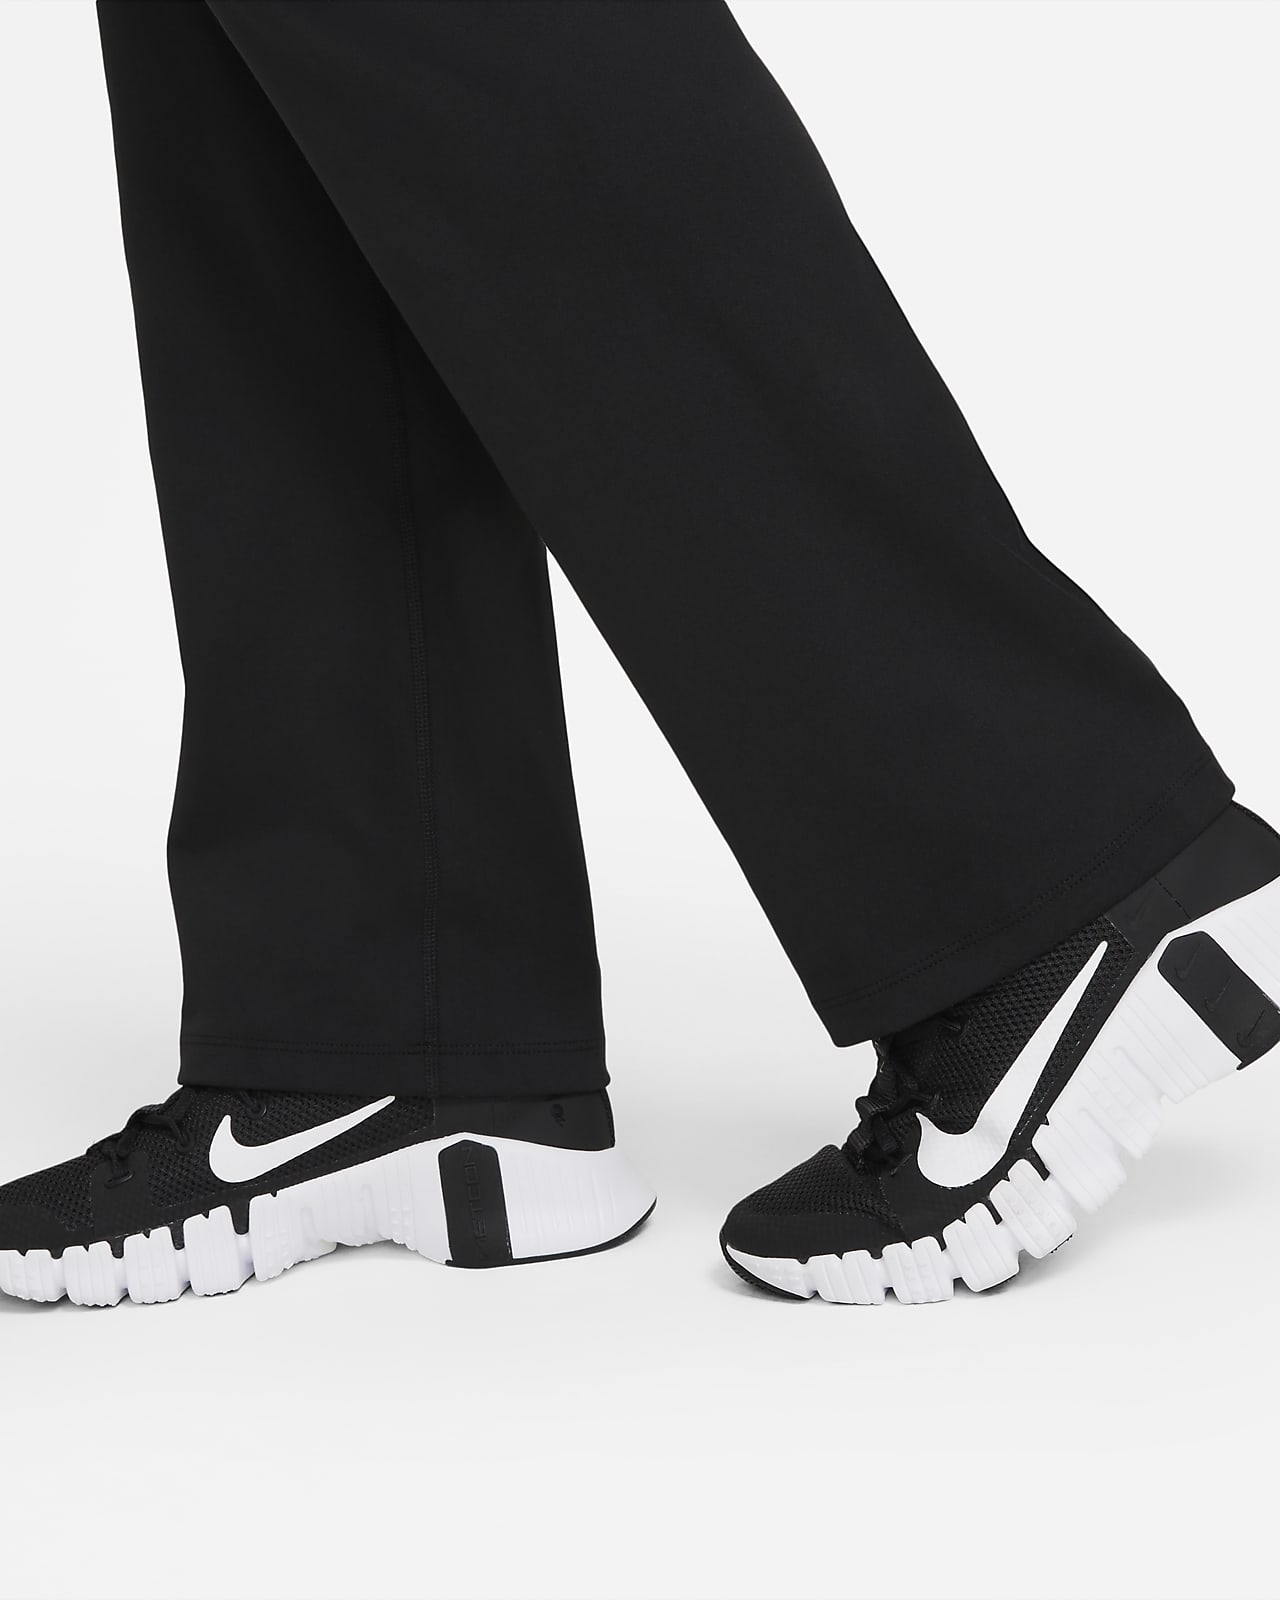 Nike Power Women's Training Pants.